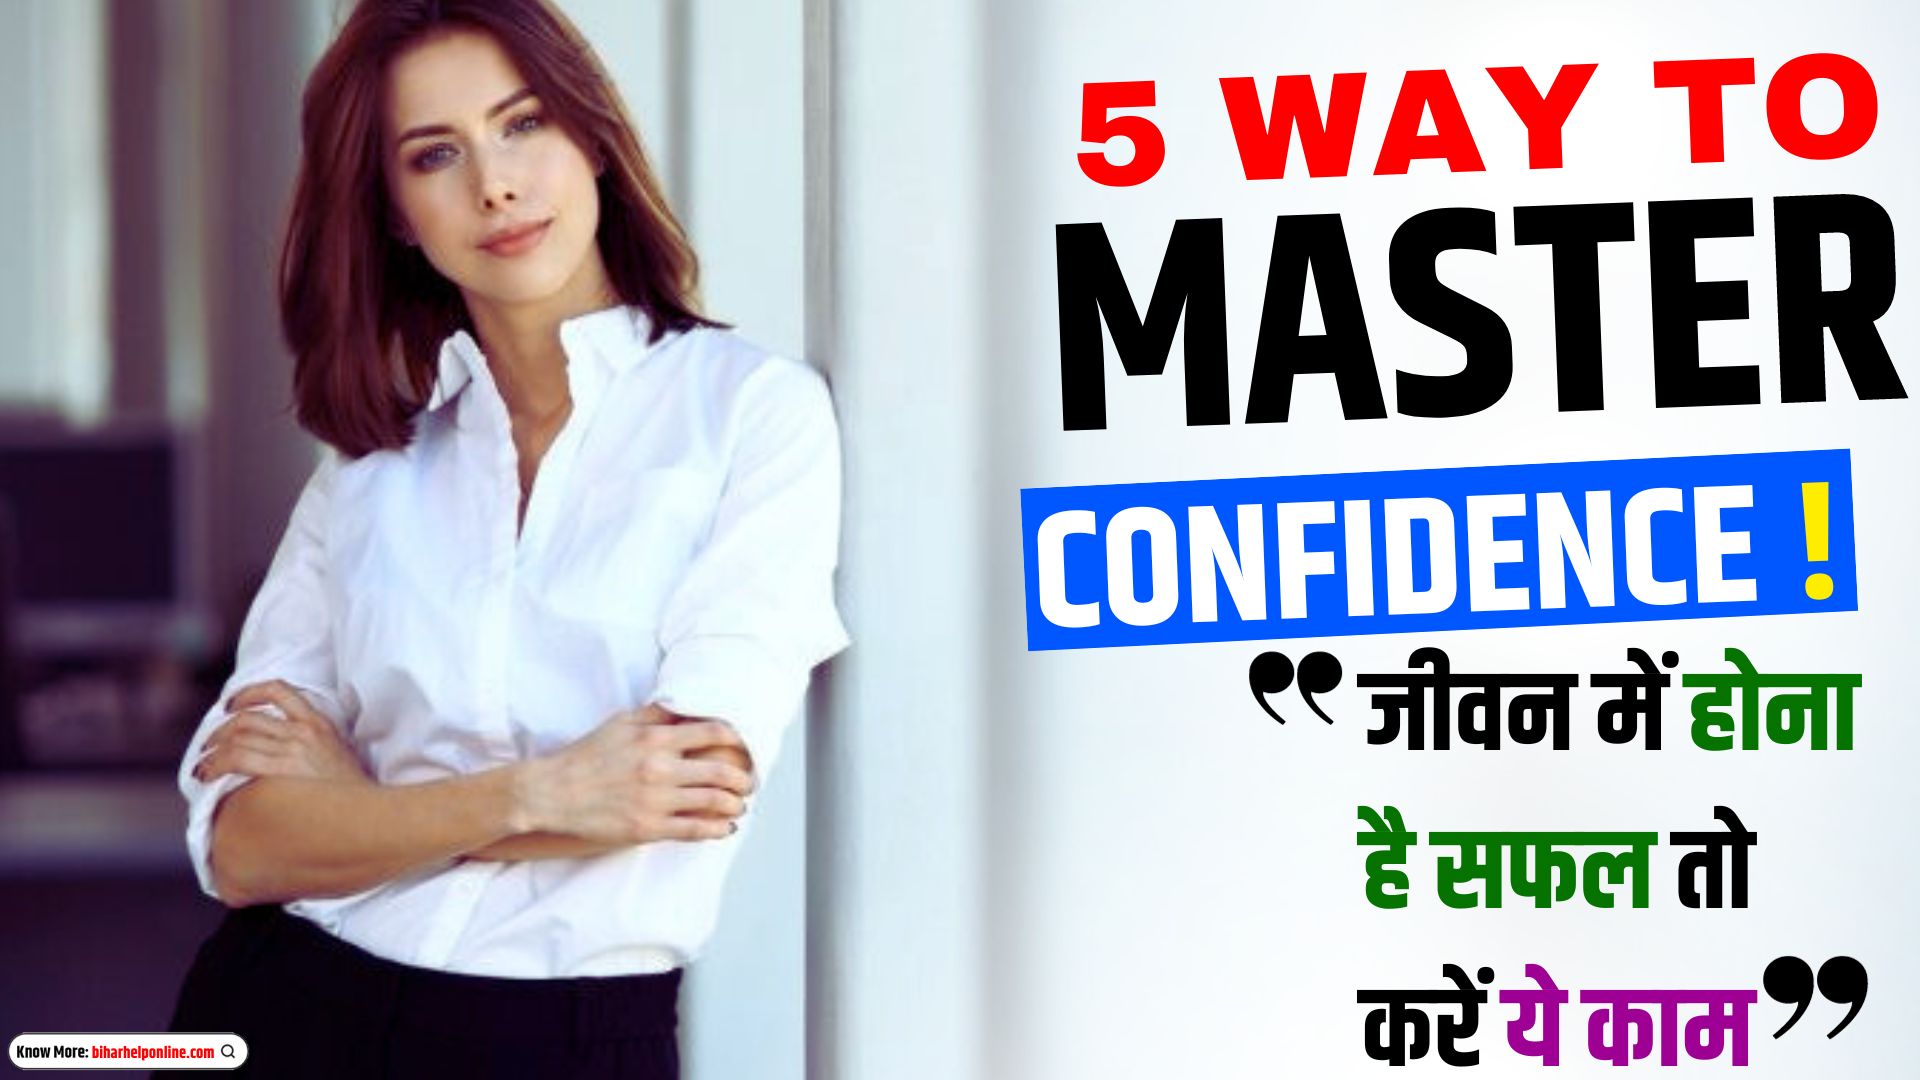 Ways To Master Confidence